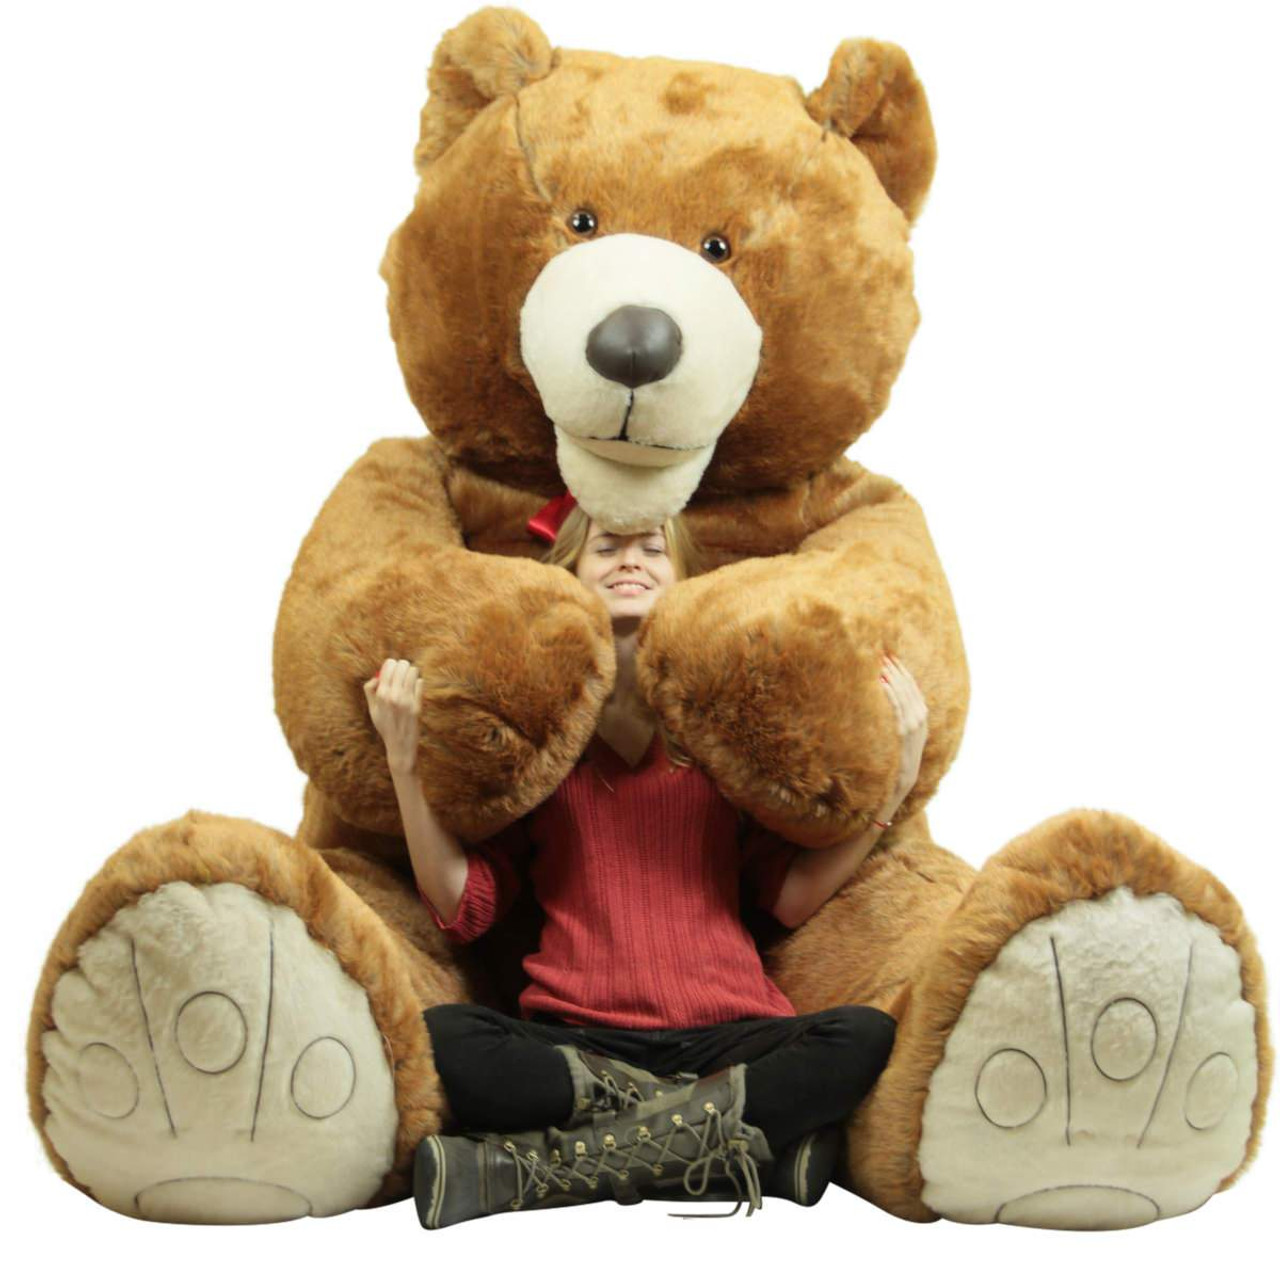 9 foot teddy bear